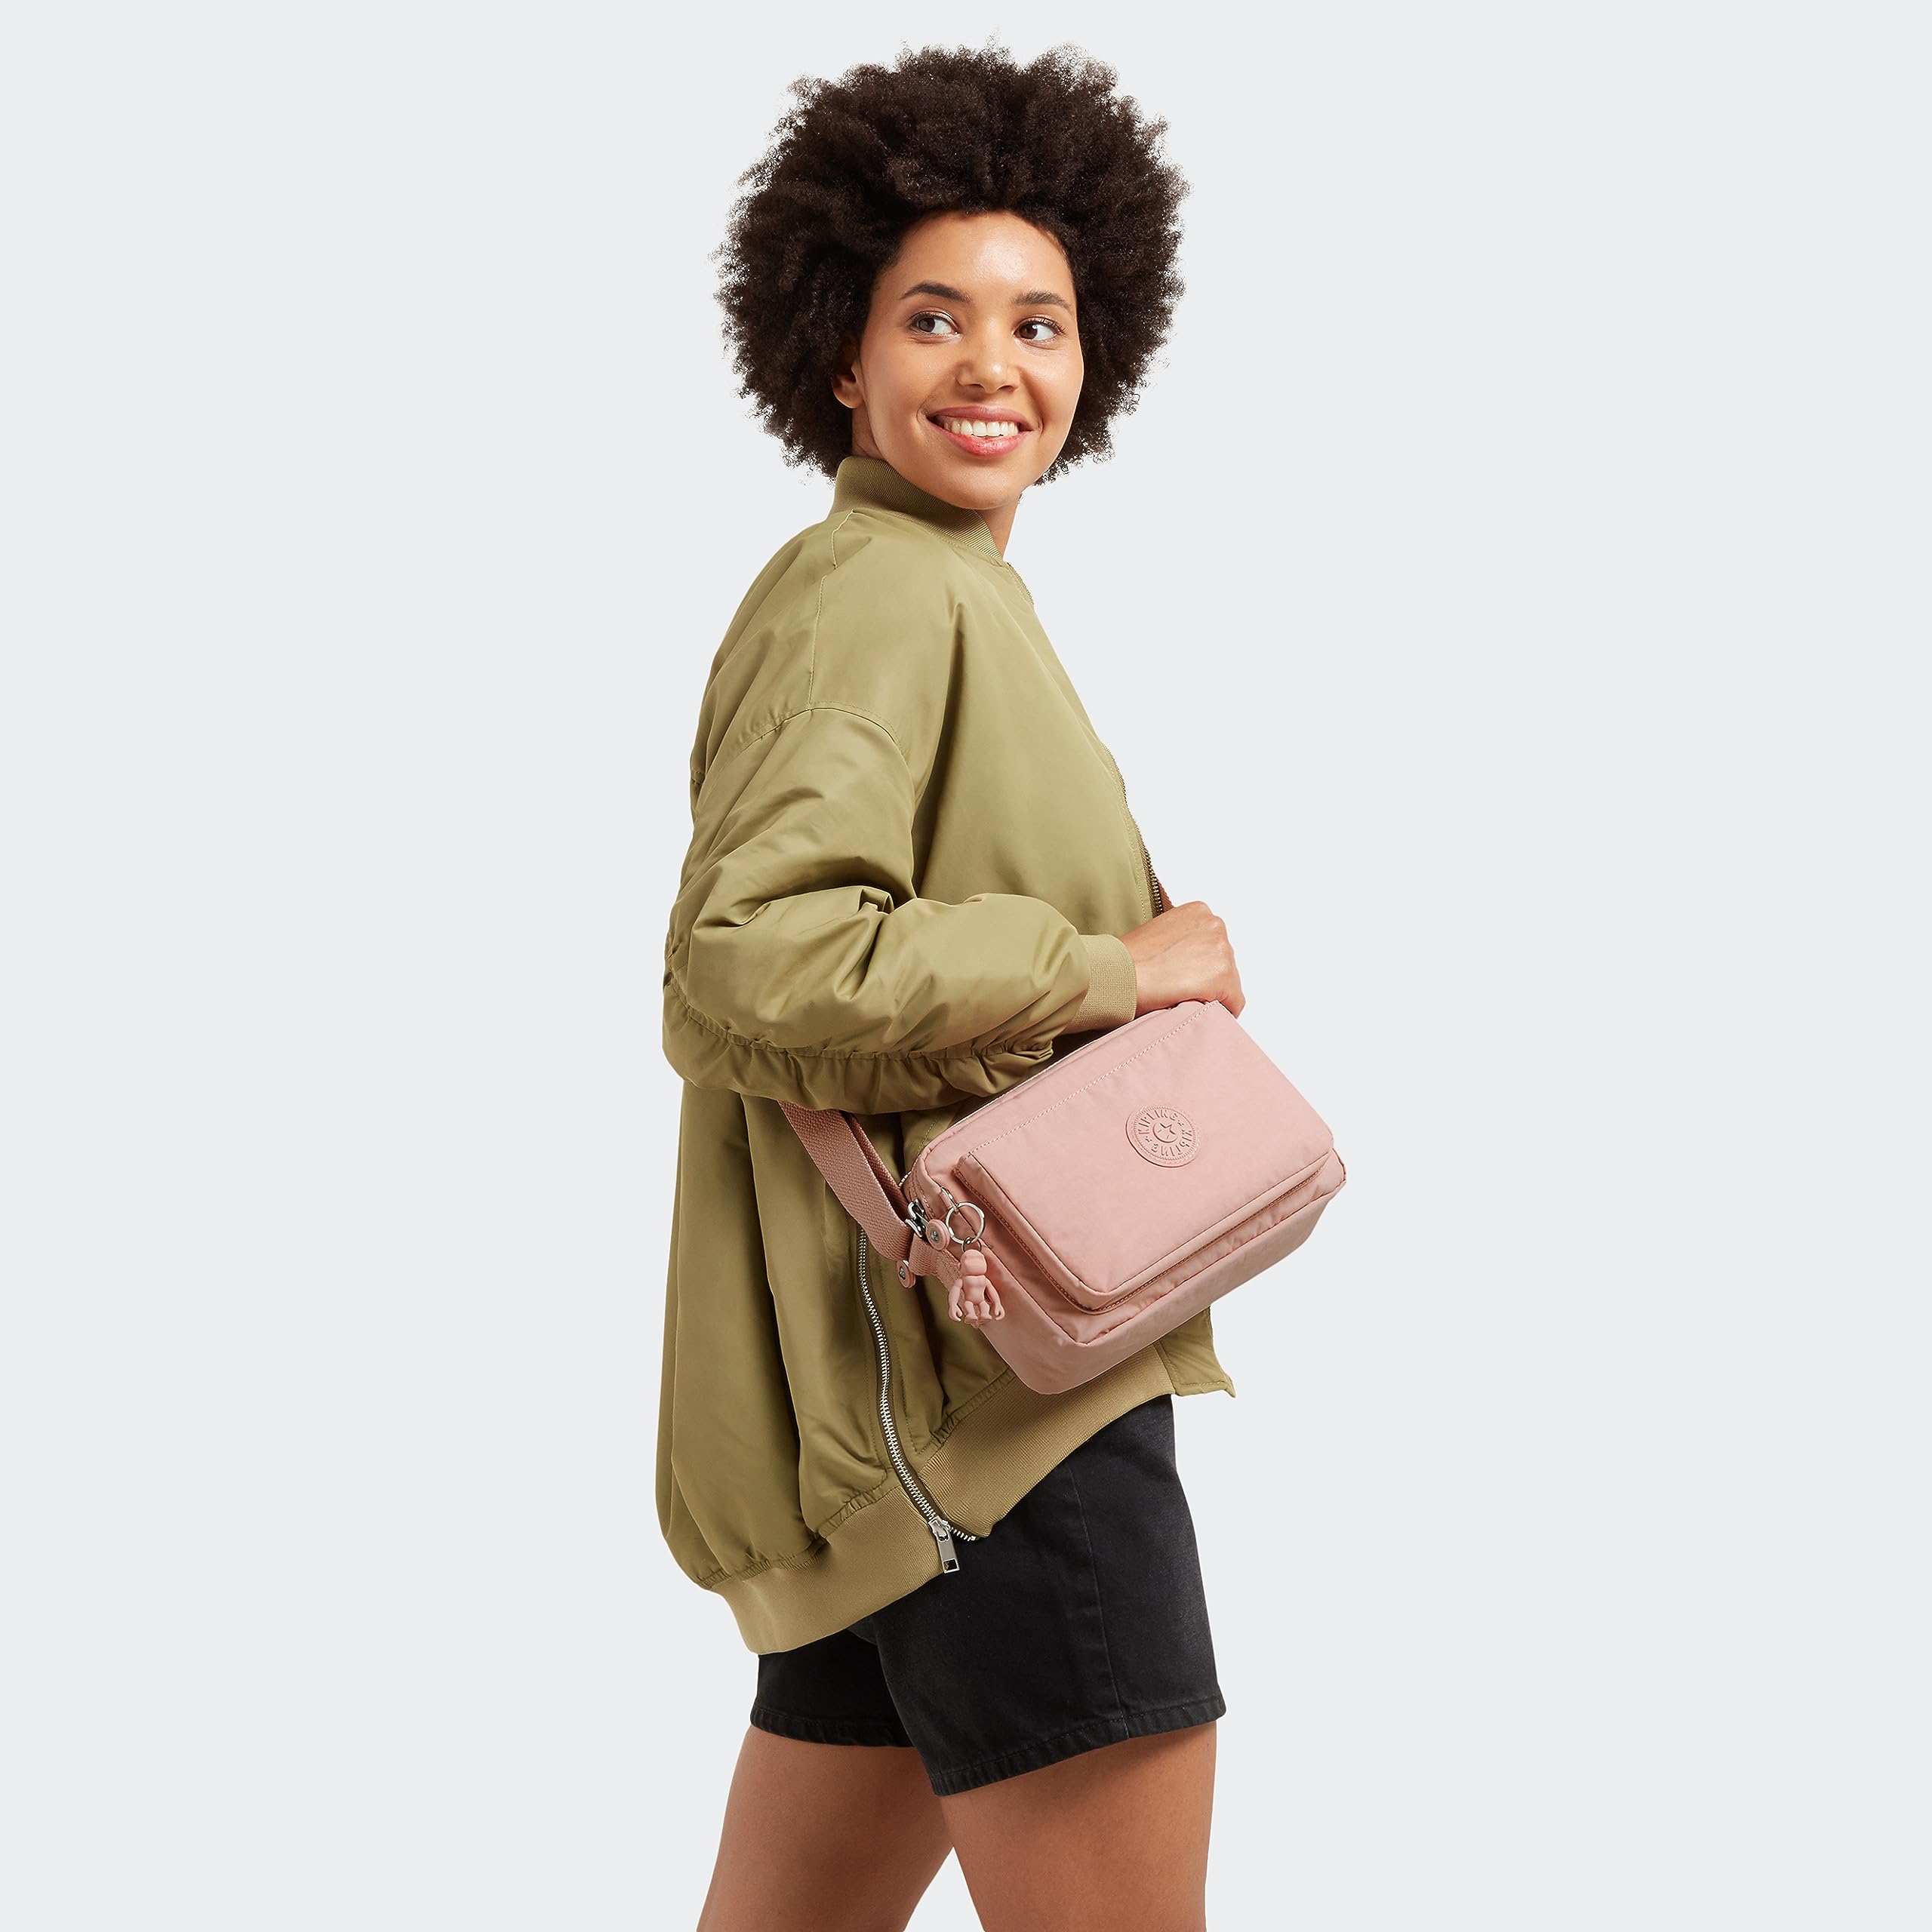 Kipling Women’s Abanu Medium Crossbody Bag, Lightweight, Adjustable Nylon Waist Pack with Multi-Compartment Zip Pockets